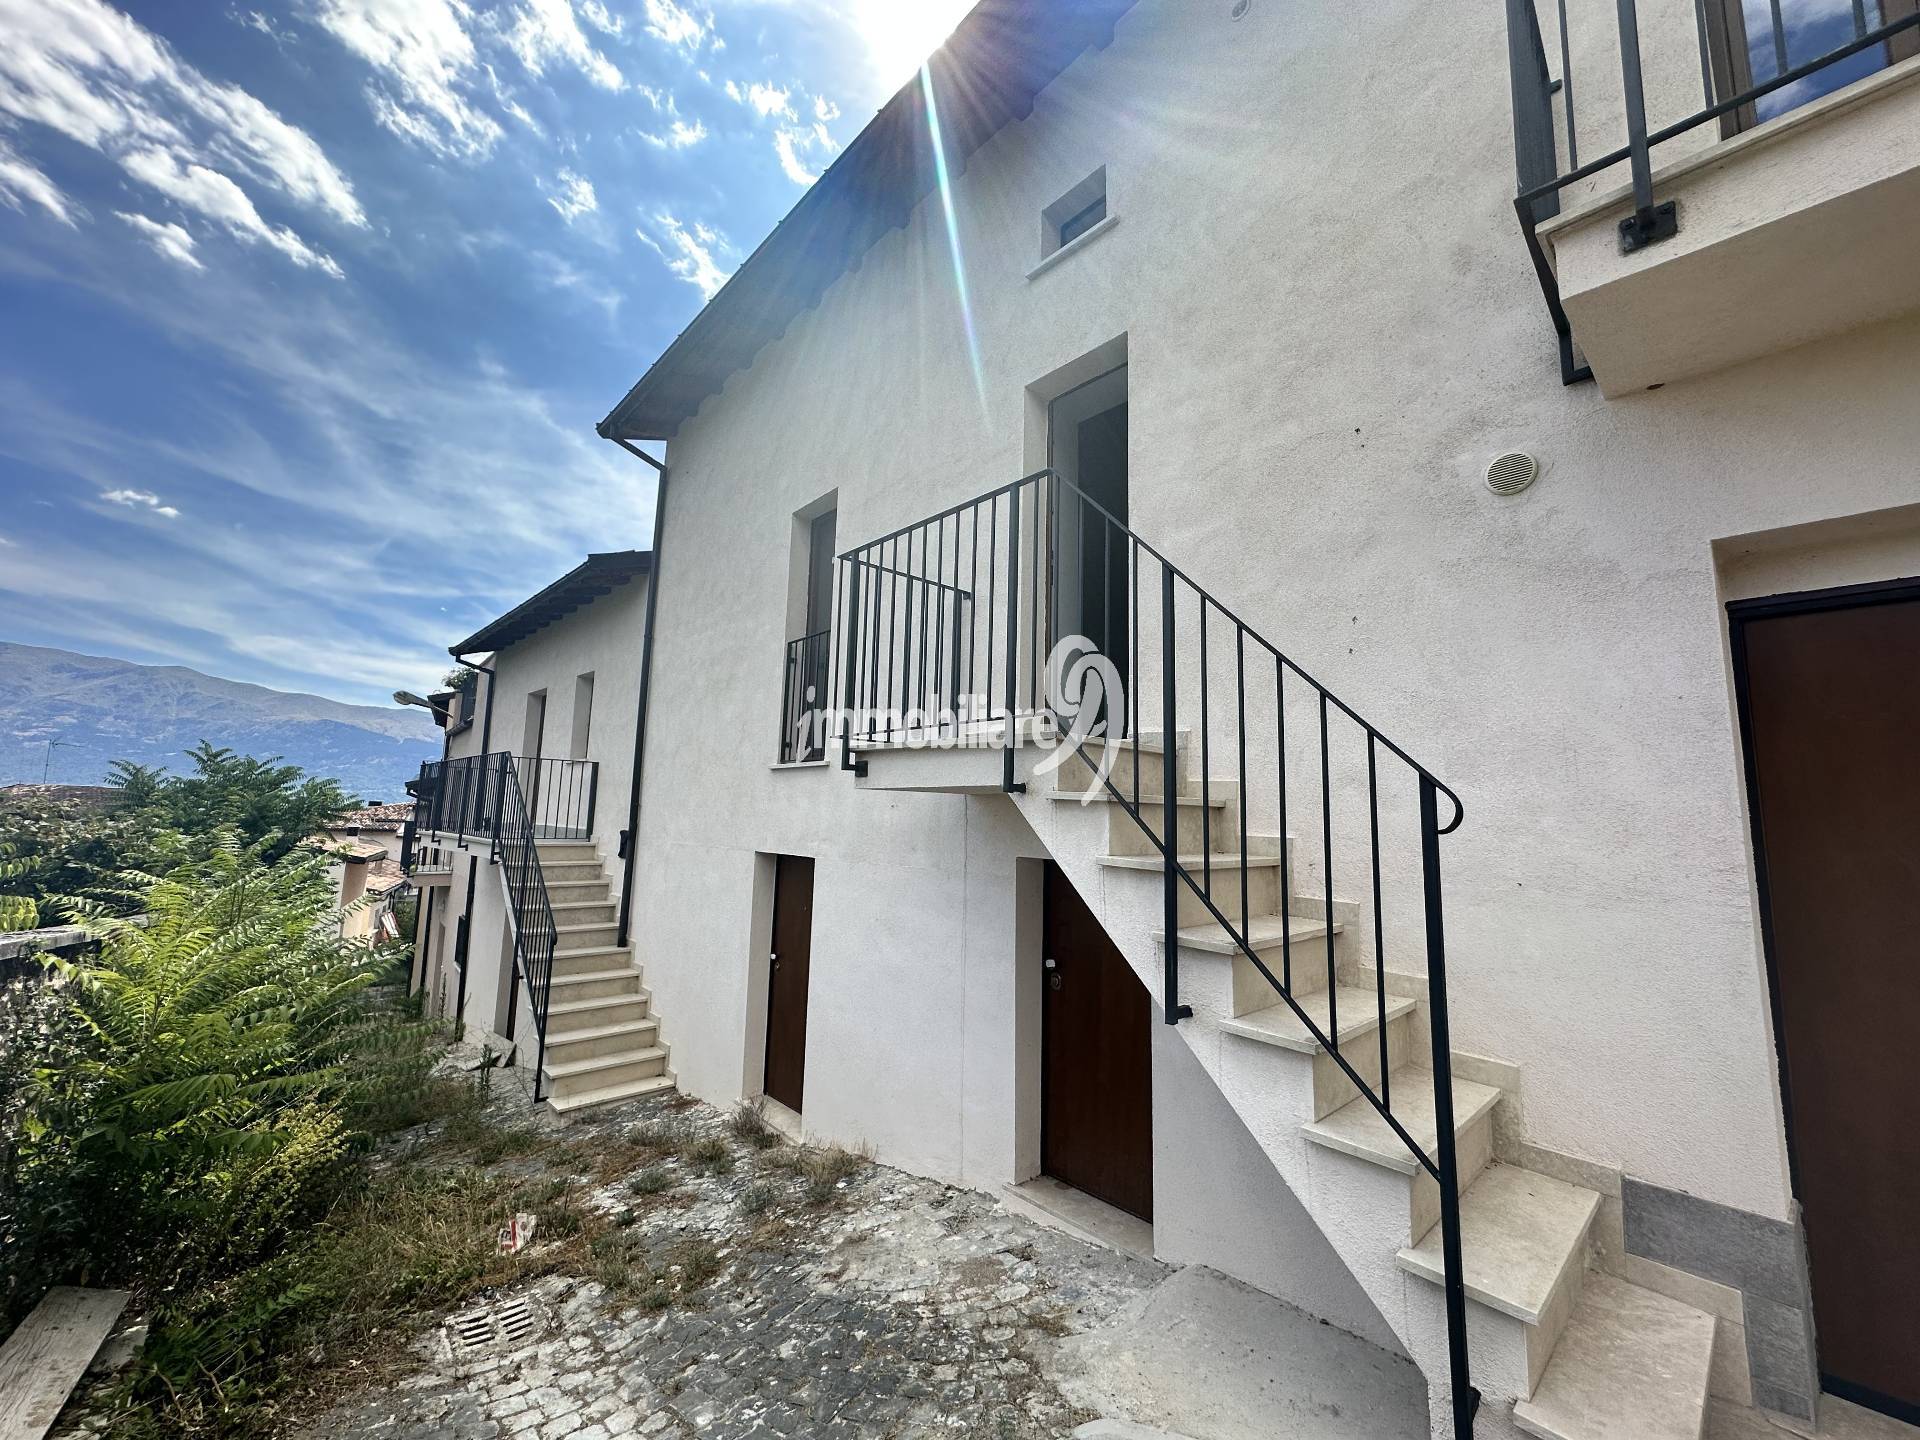 Casa indipendente in vendita, L'Aquila paganica - tempera